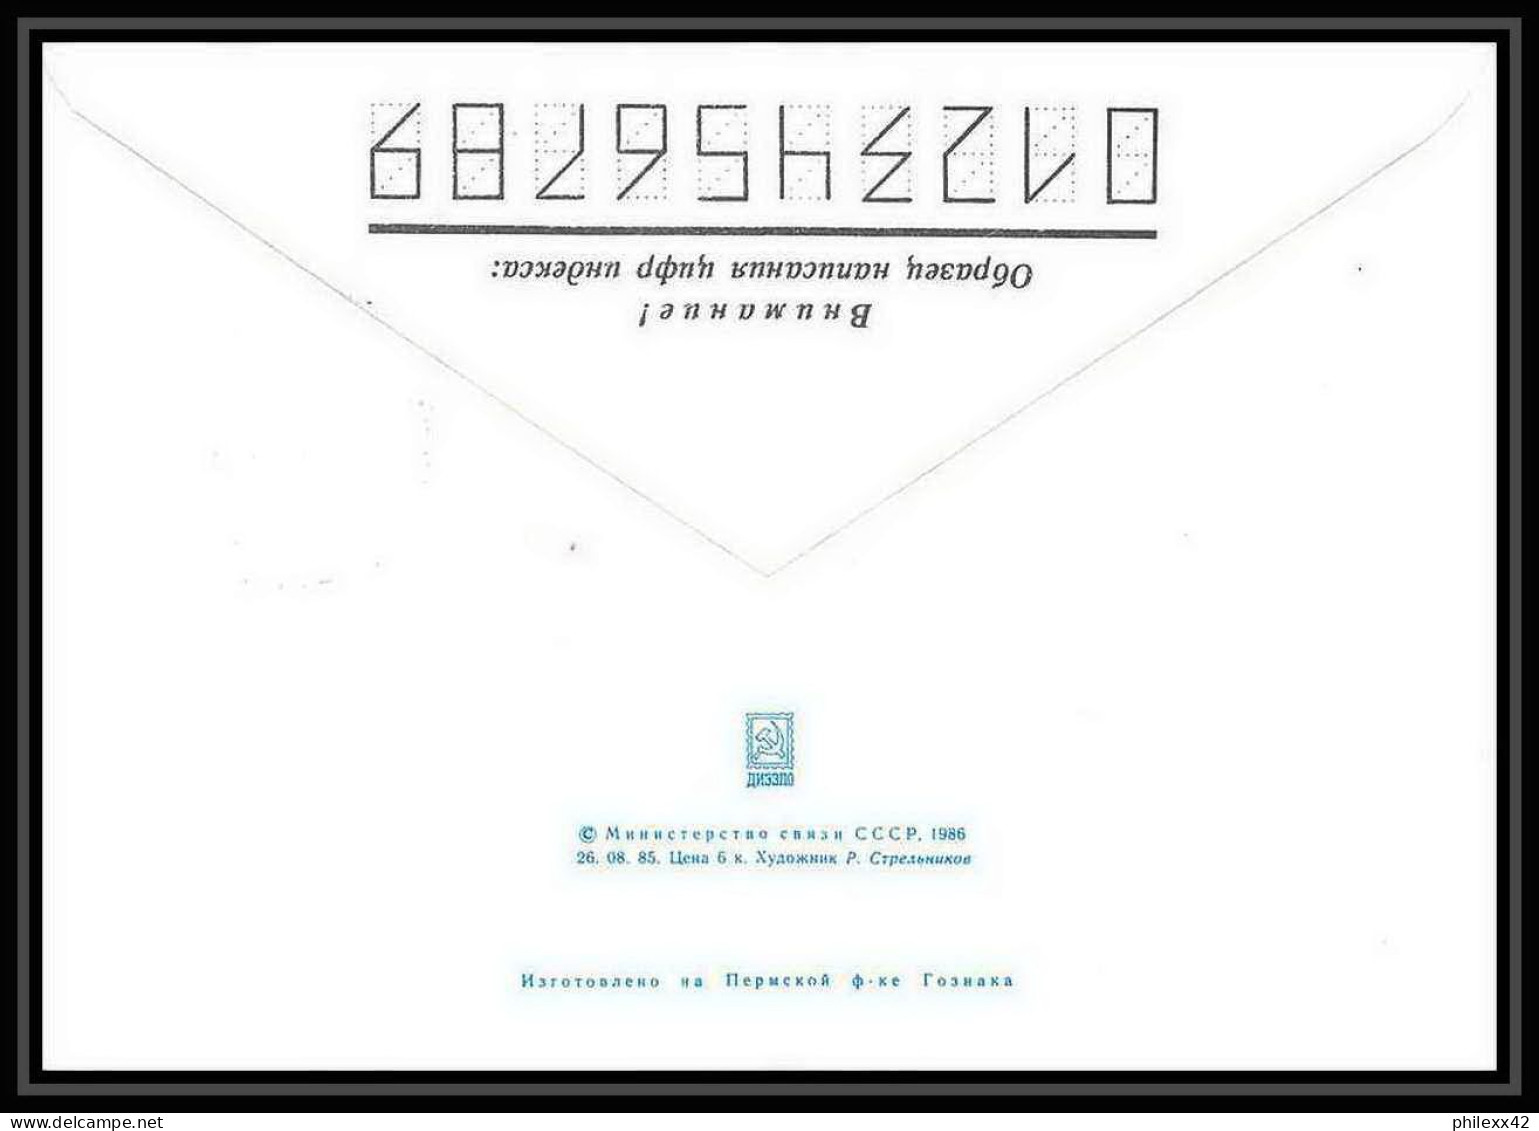 9279/ Espace (space Raumfahrt) Entier Postal (Stamped Stationery) 27/4/1986 Tsiolkovski (Russia Urss USSR) - Russia & USSR